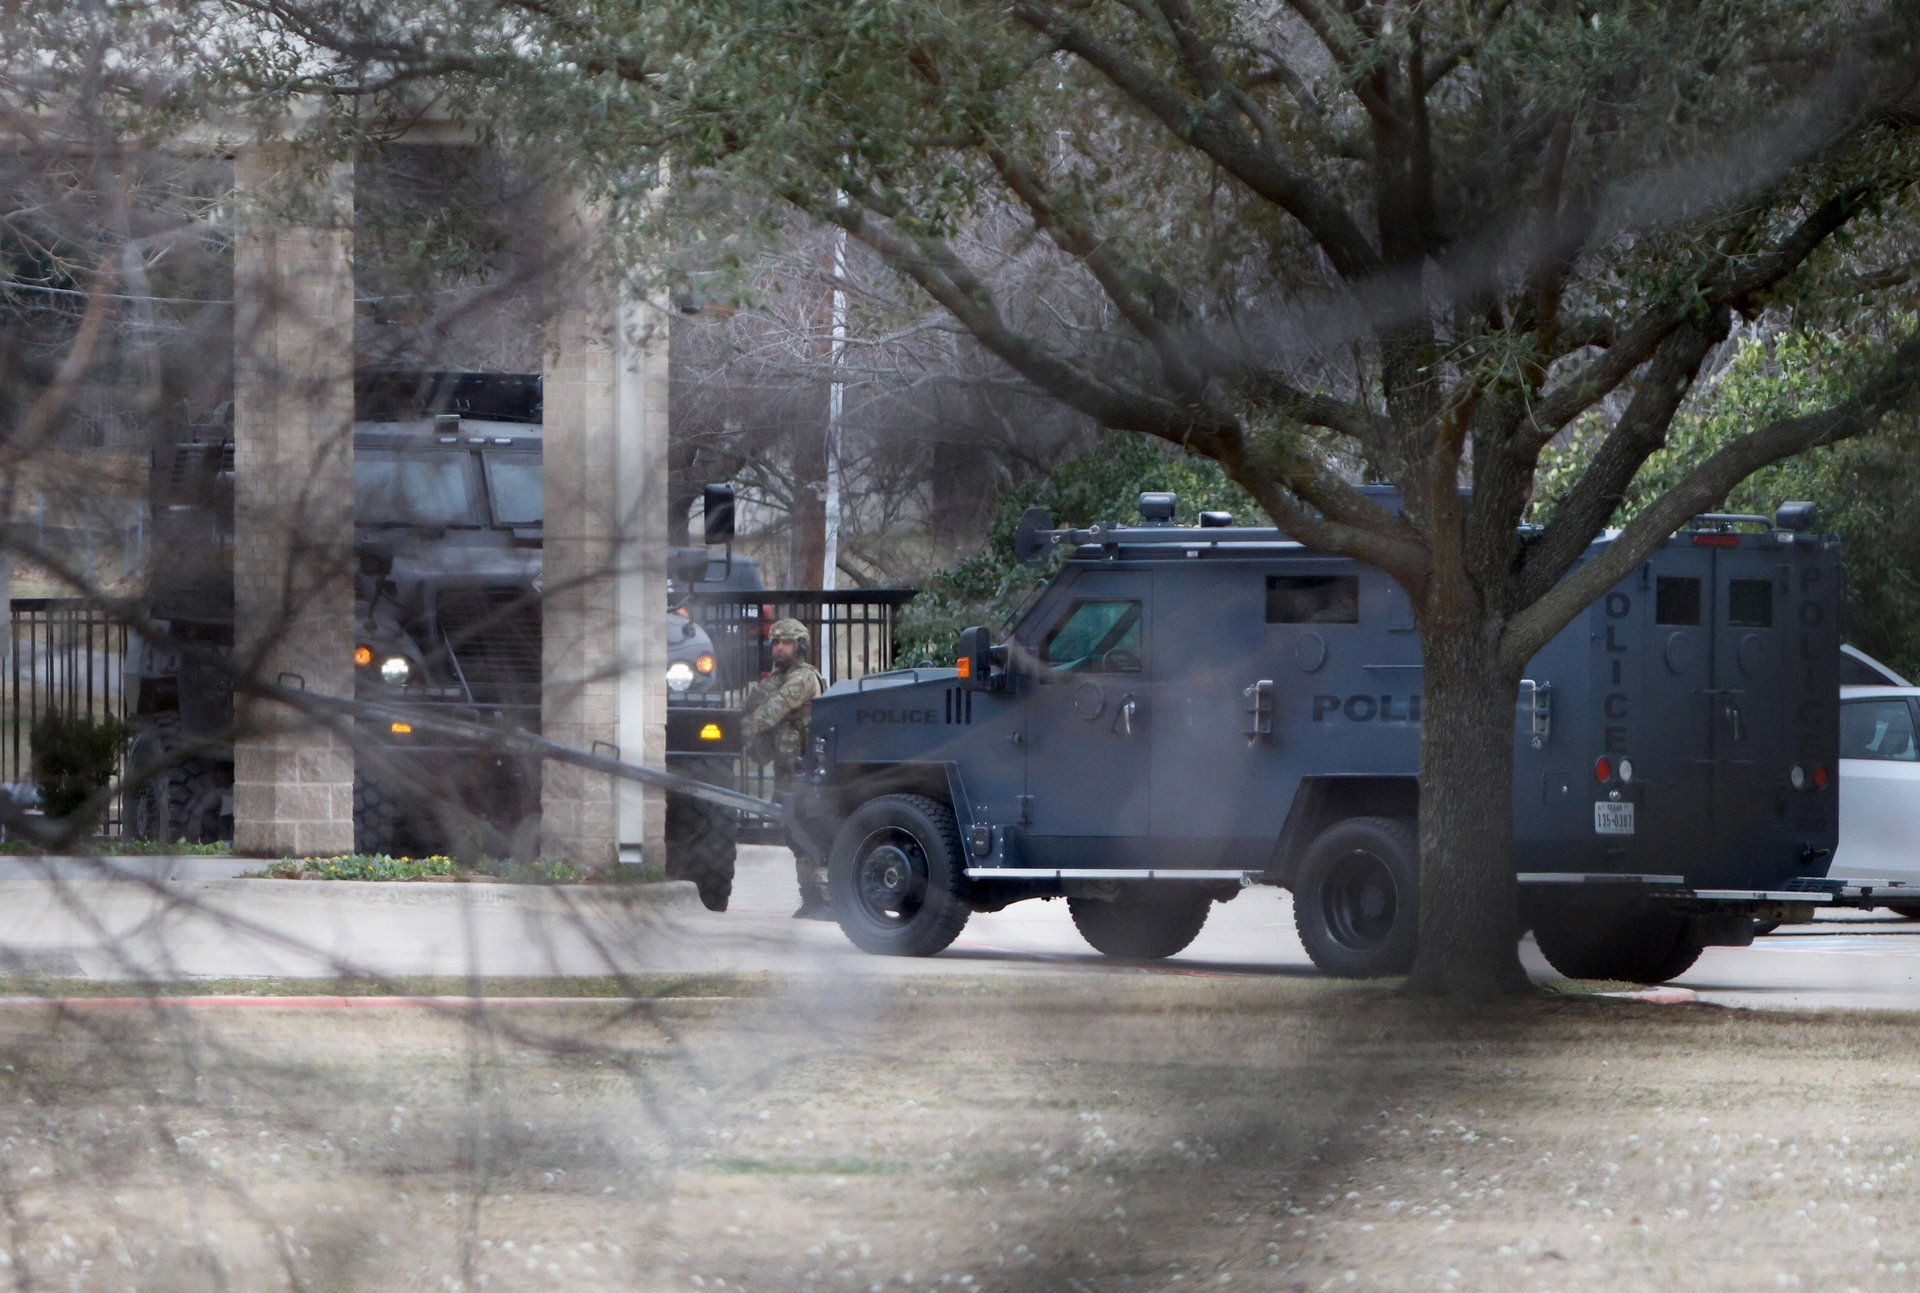 British hostage-taker behind Texas synagogue siege named as Malik Faisal Akram